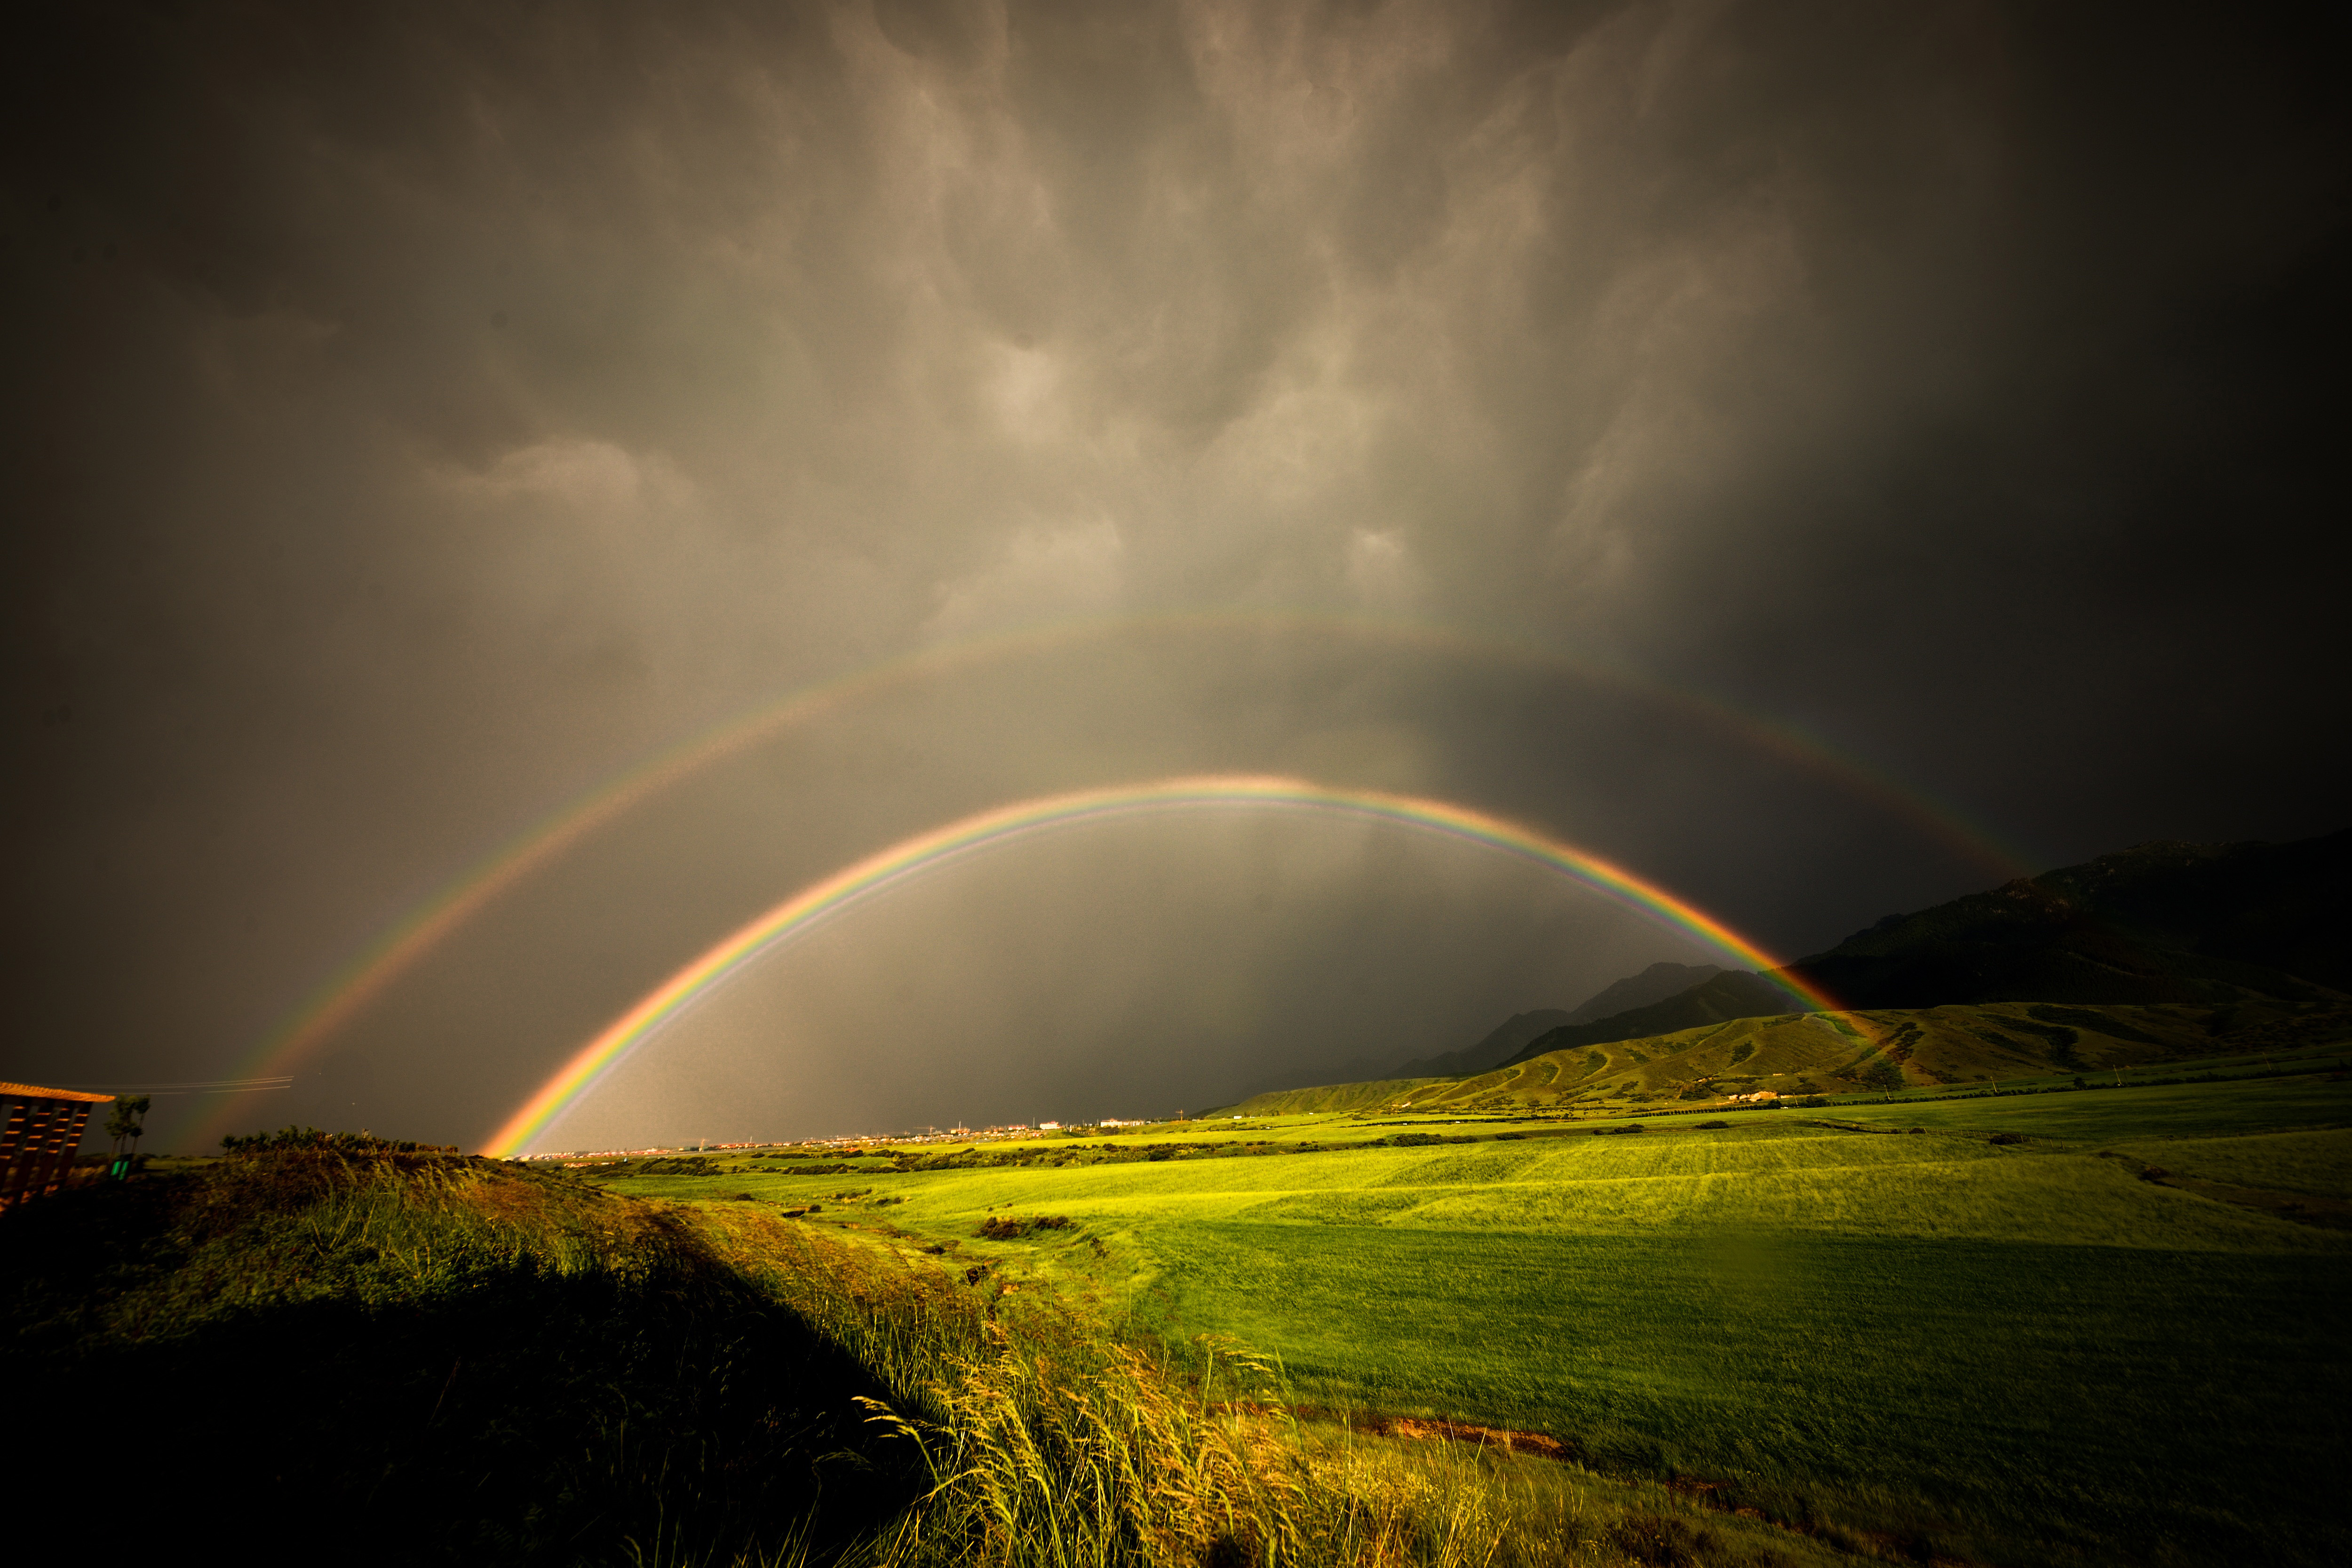 Rainbow Photography